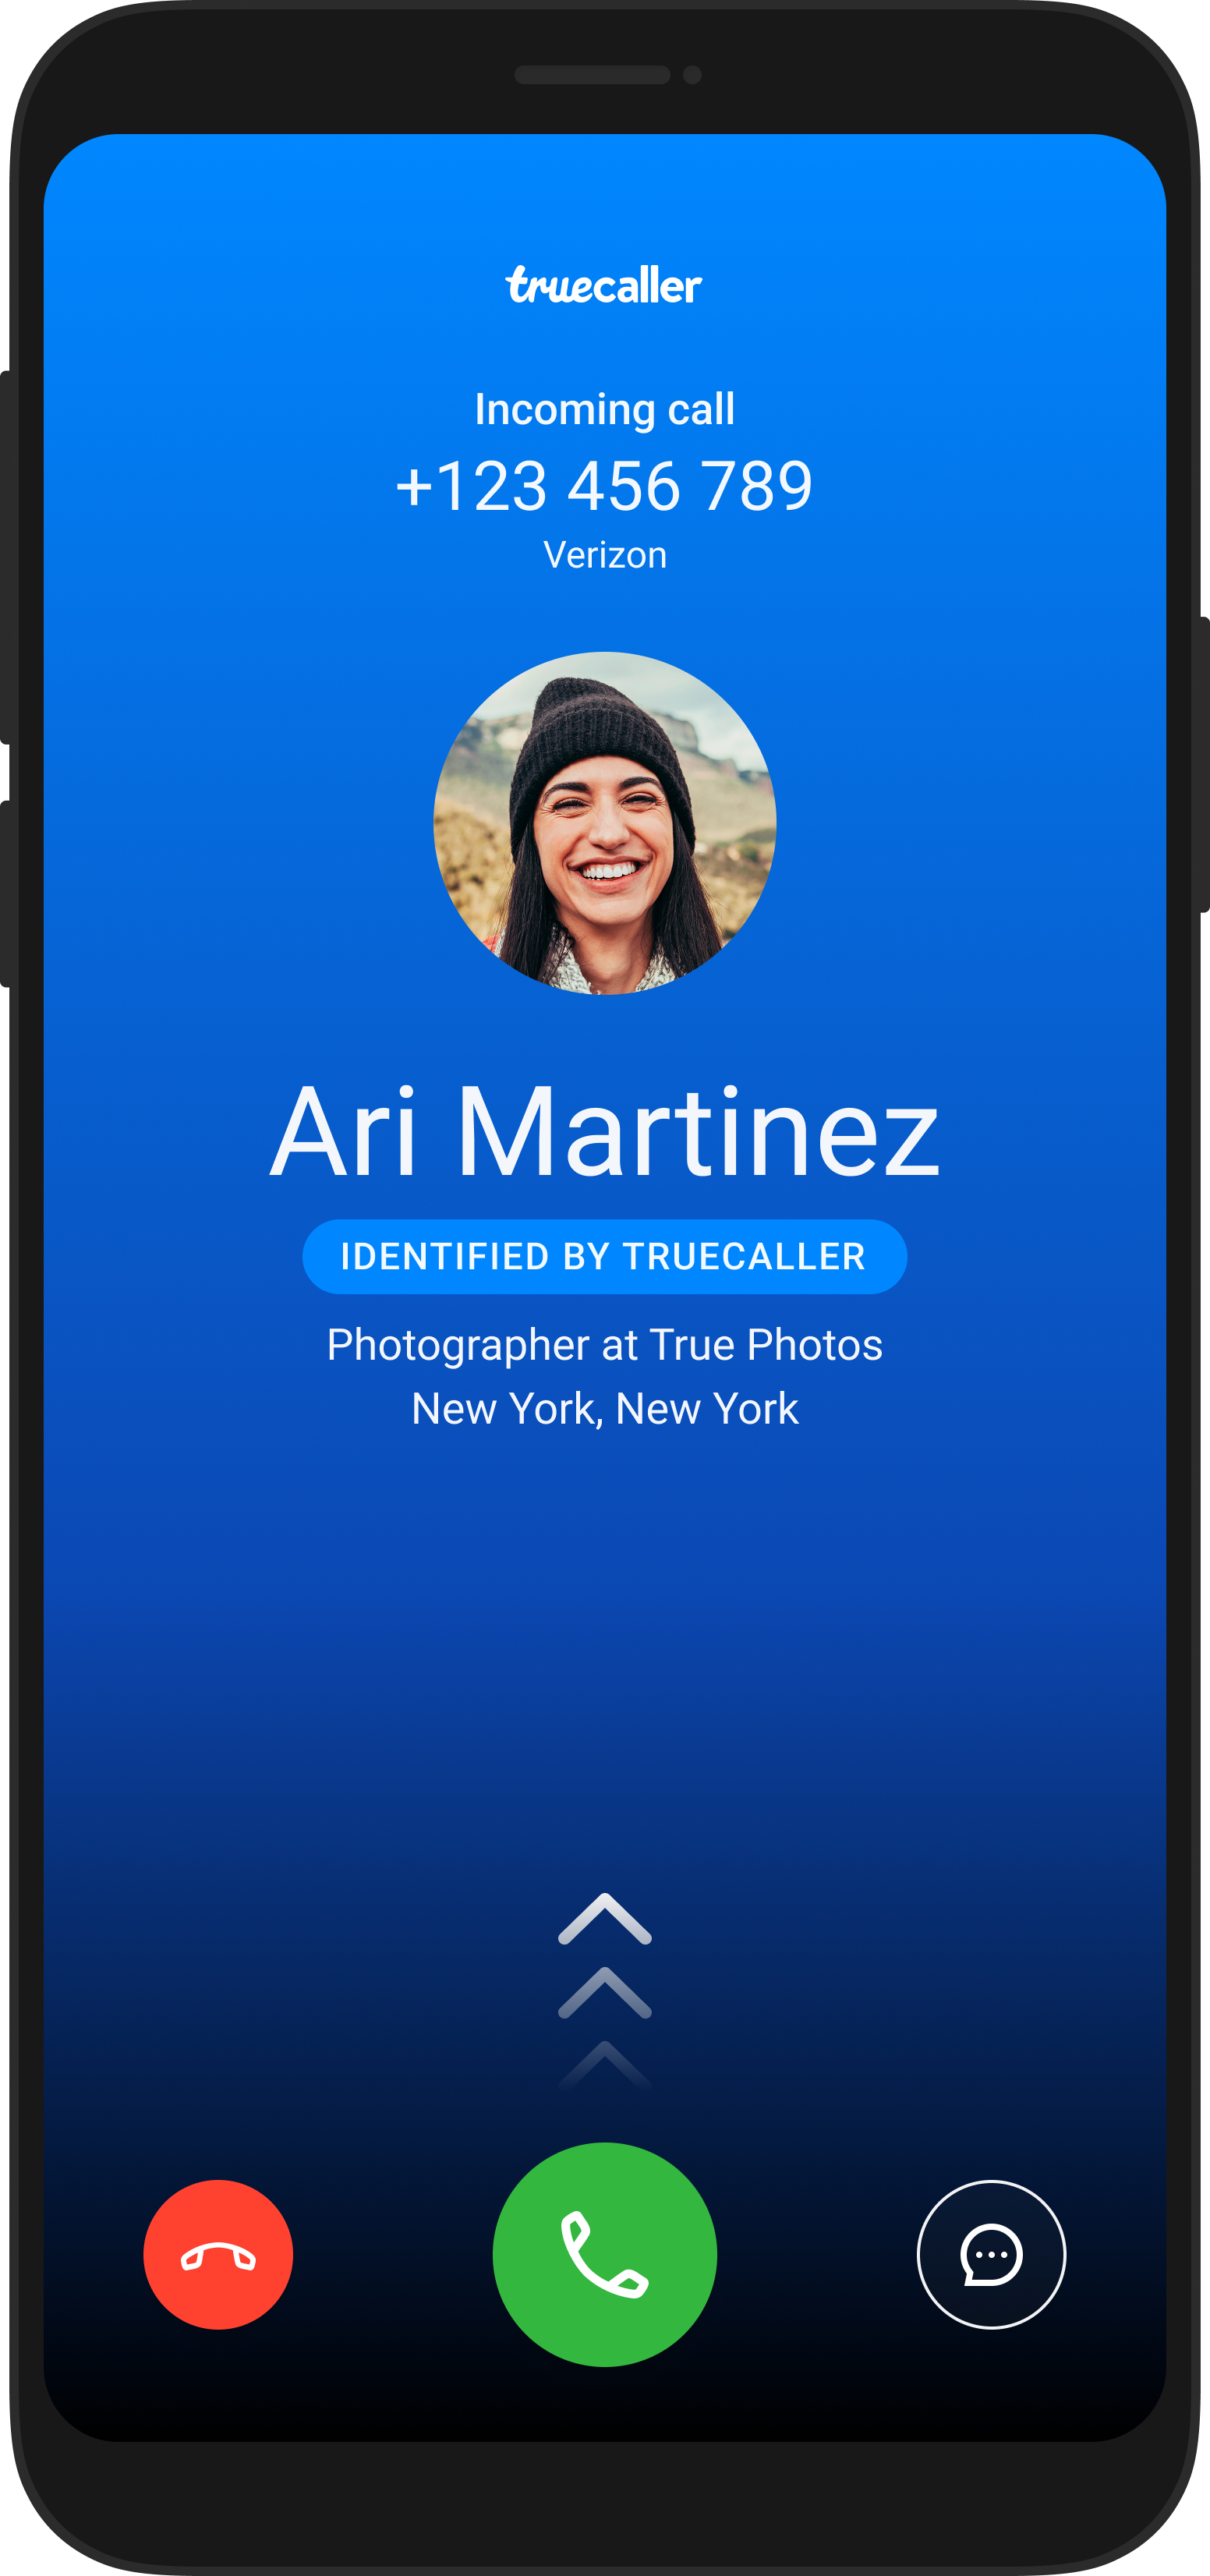 Blue phone screen showing how Caller ID looks like